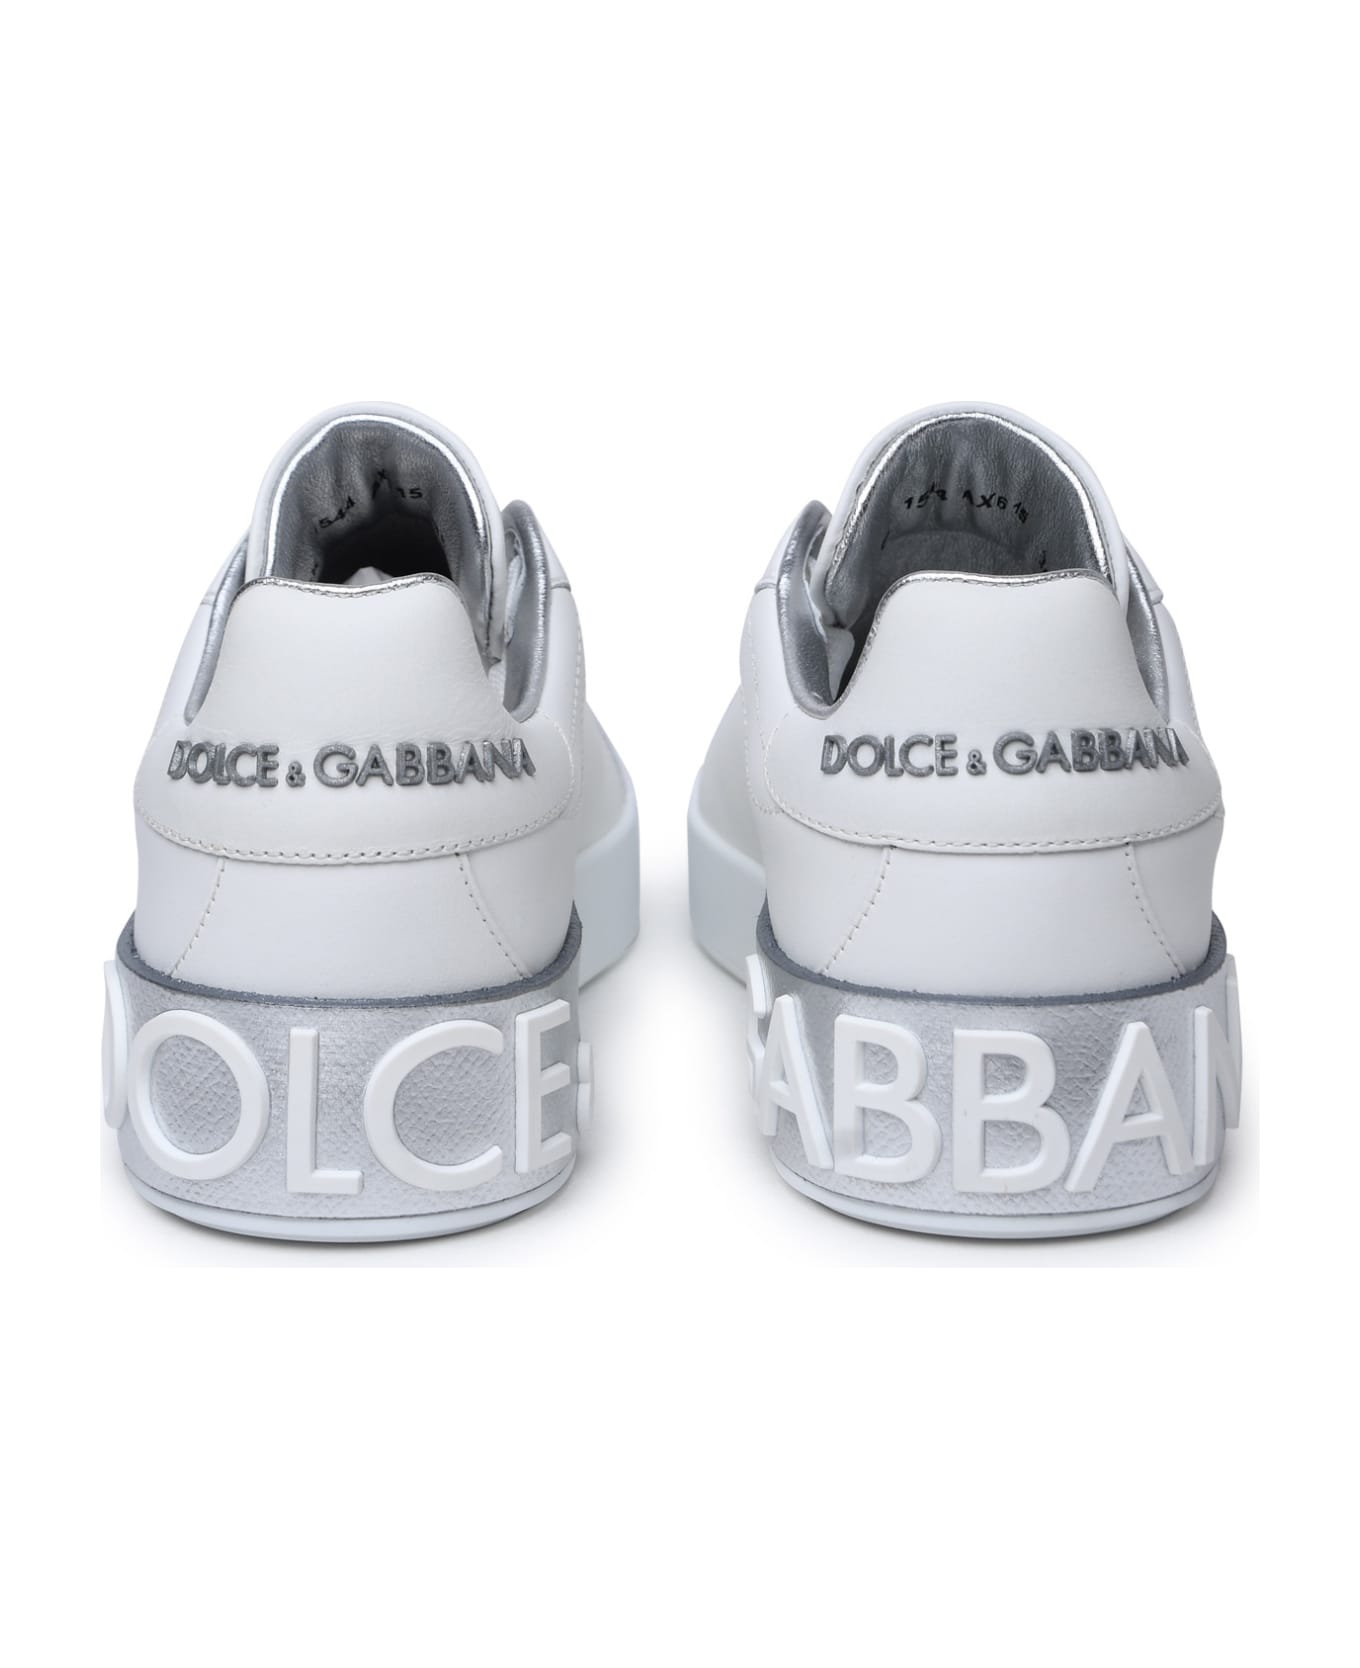 Dolce & Gabbana Portofino Logo Sneakers - White